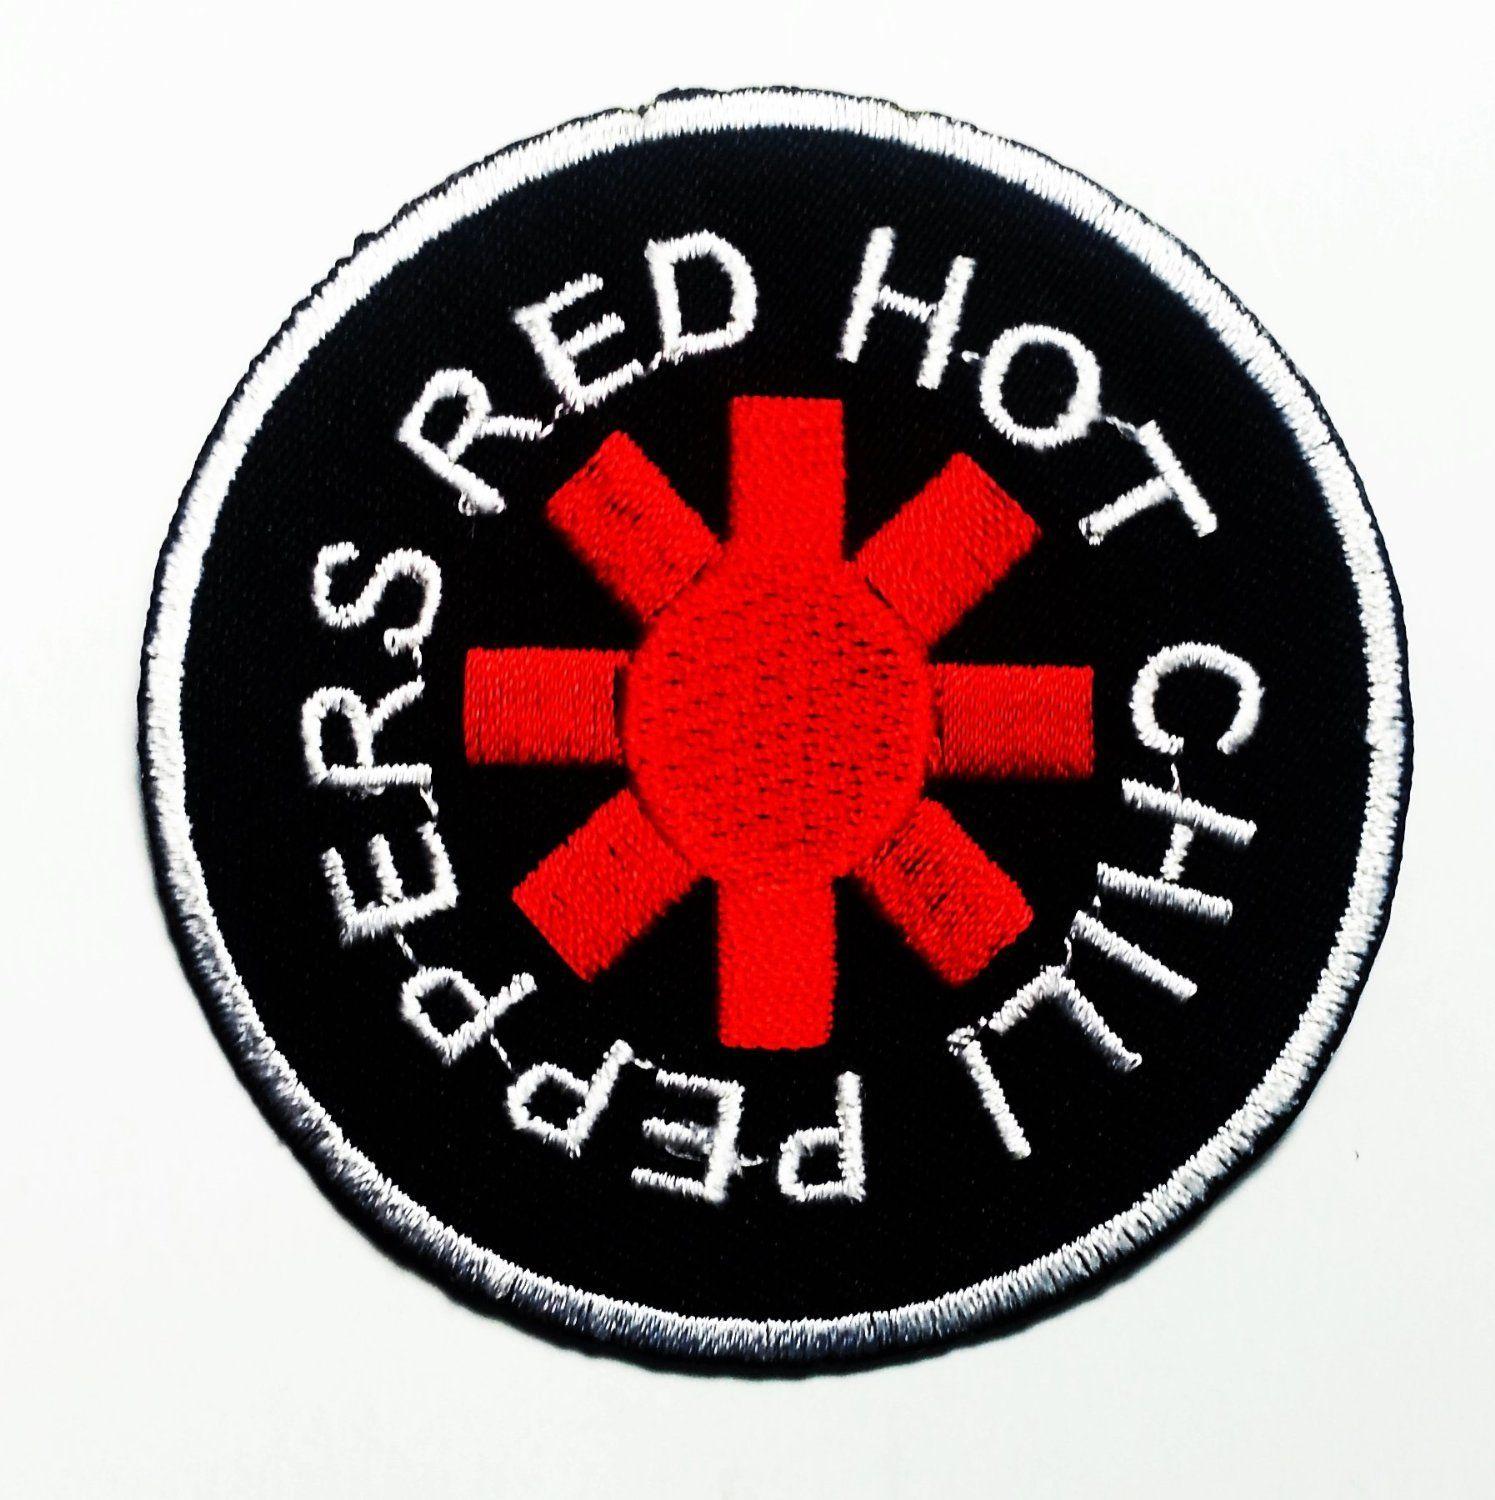 Punk Band Logo - Amazon.com: Red Hot Chili Peppers RHCP Funk Punk Band Logo t Shirts ...